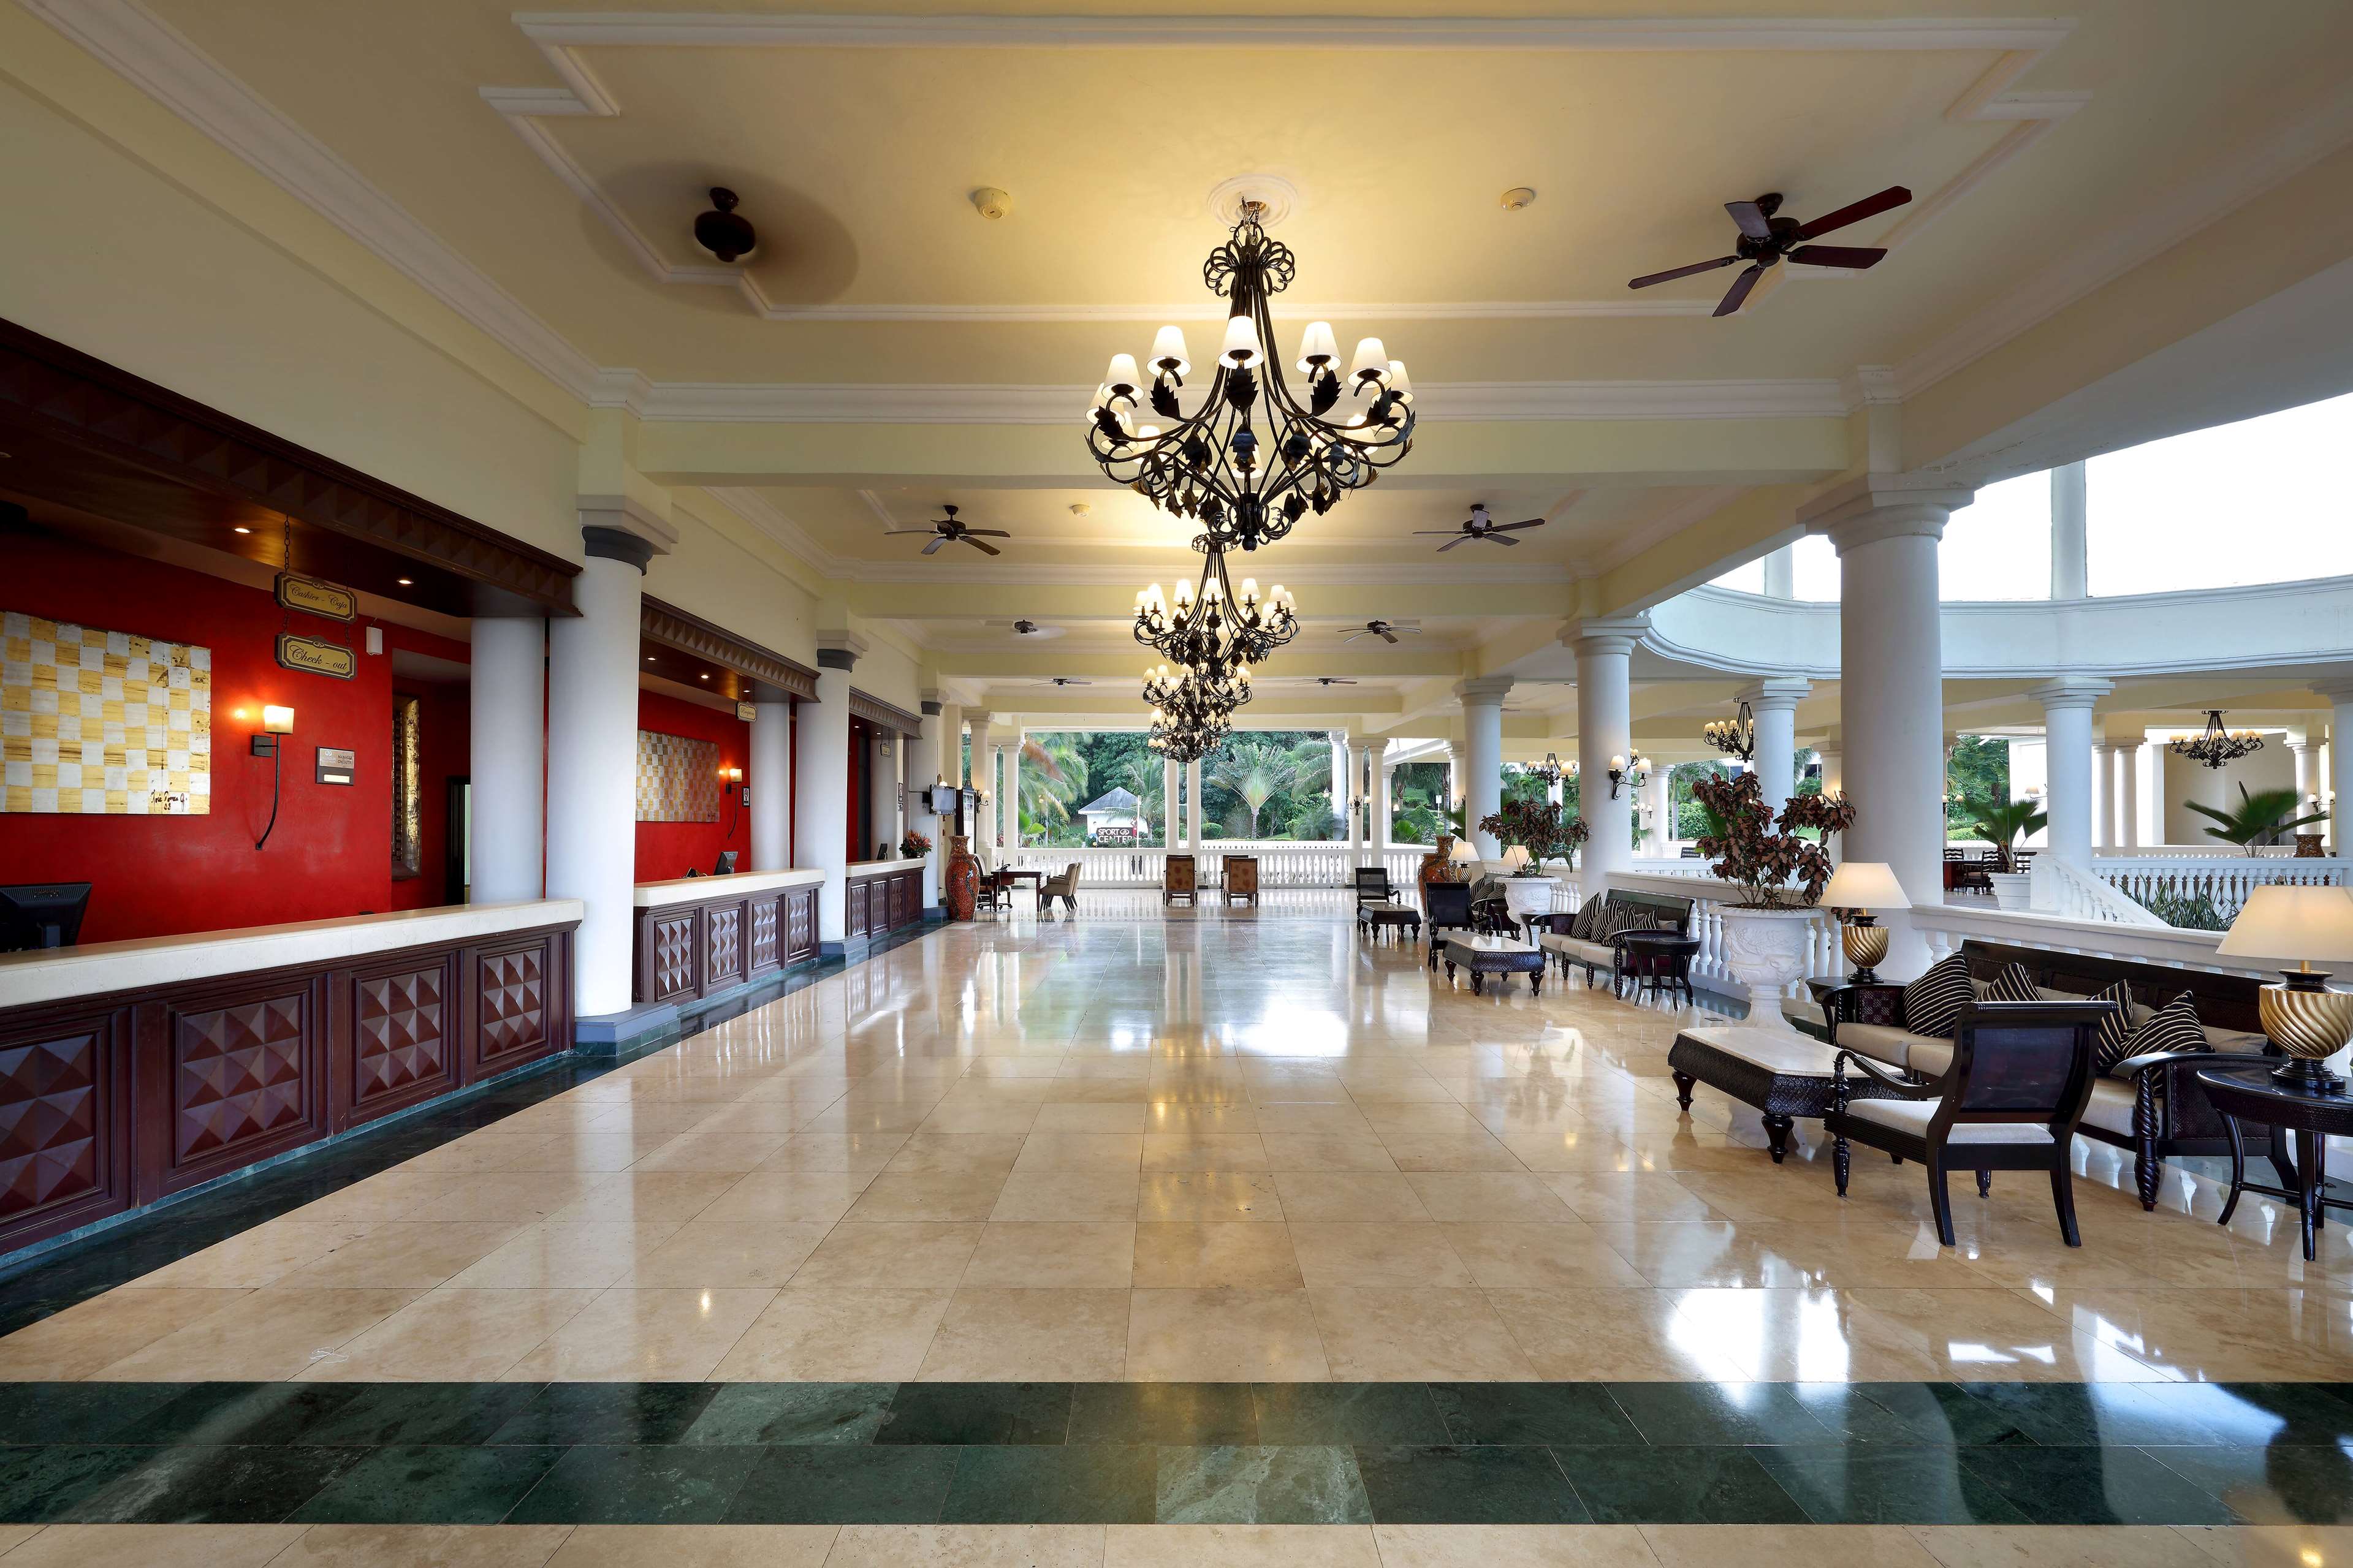 Grand Palladium Jamaica Resort & Spa